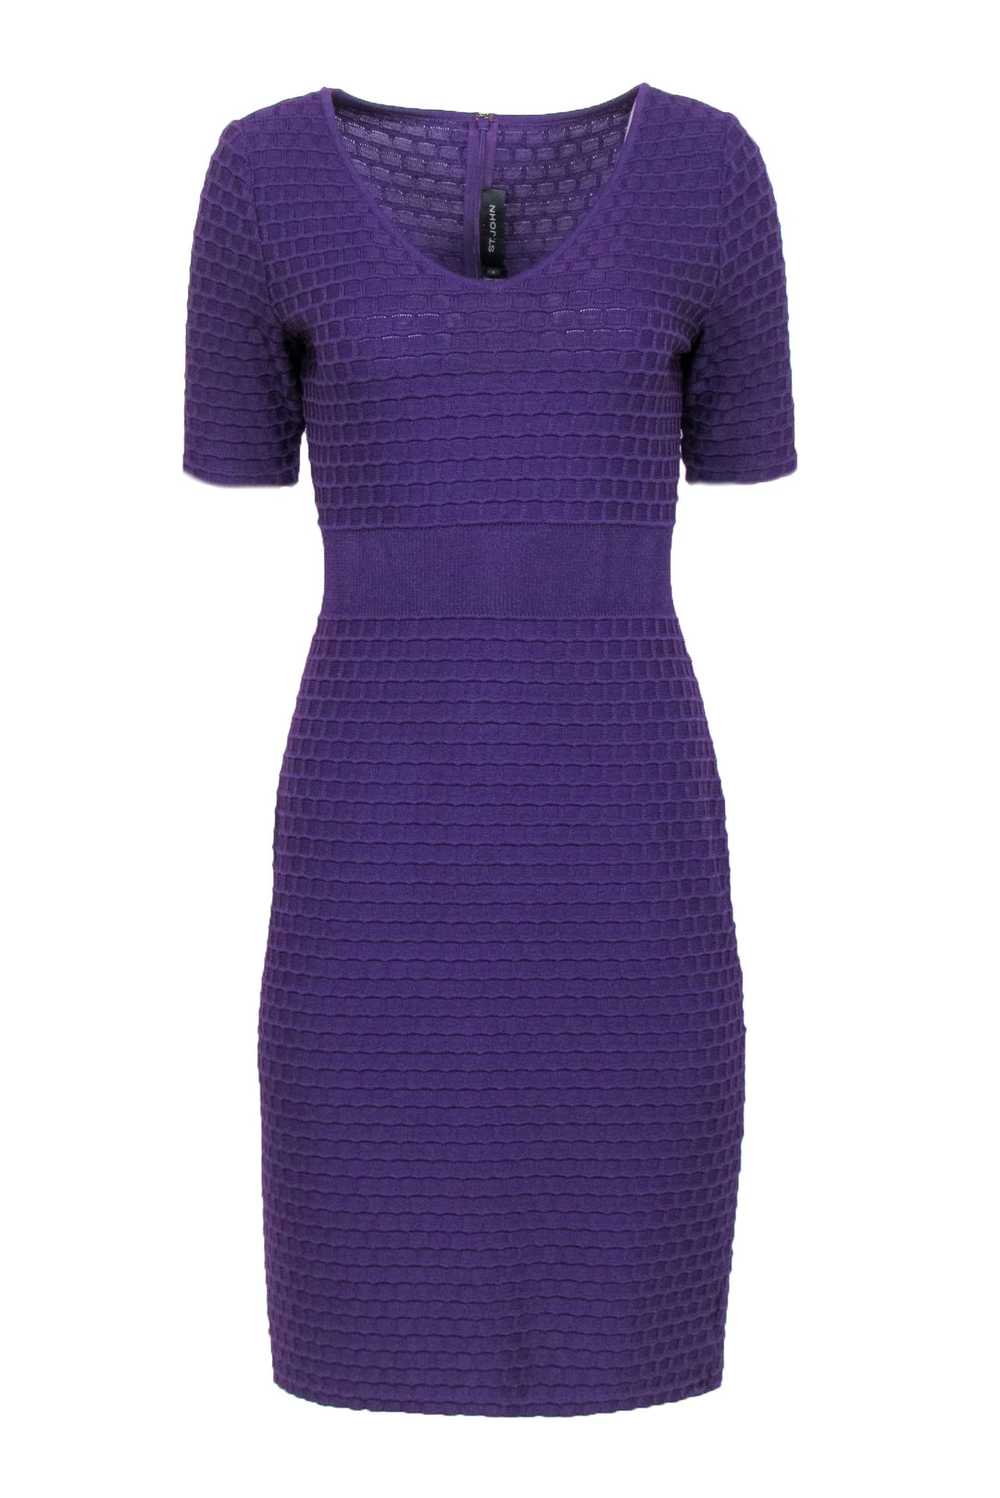 St. John - Purple Textured Knit Sheath Dress Sz 4 - image 1